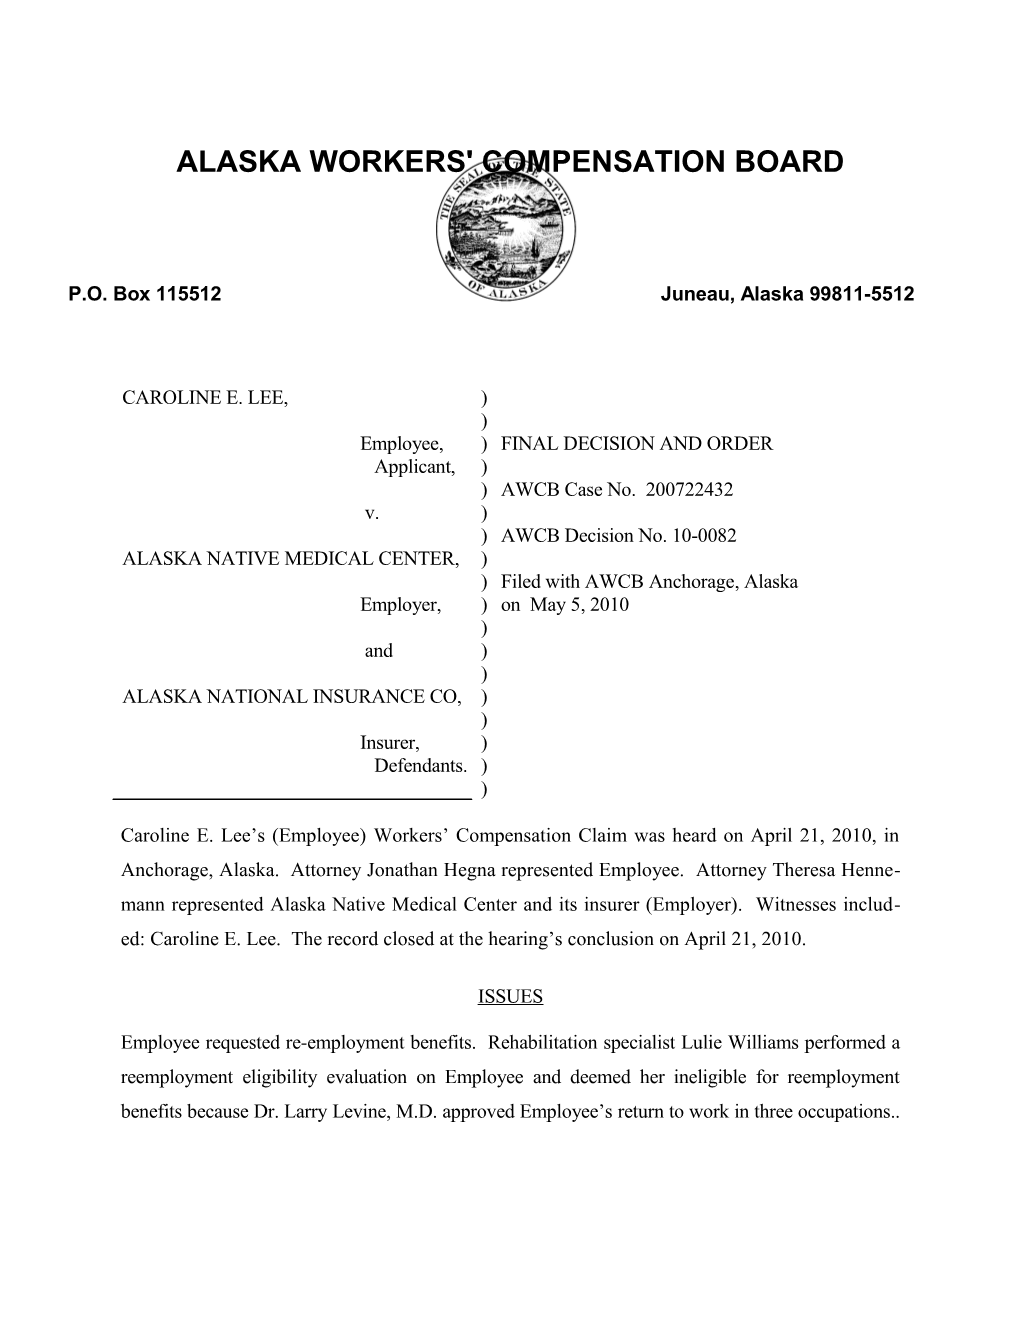 Alaska Workers' Compensation Board s30